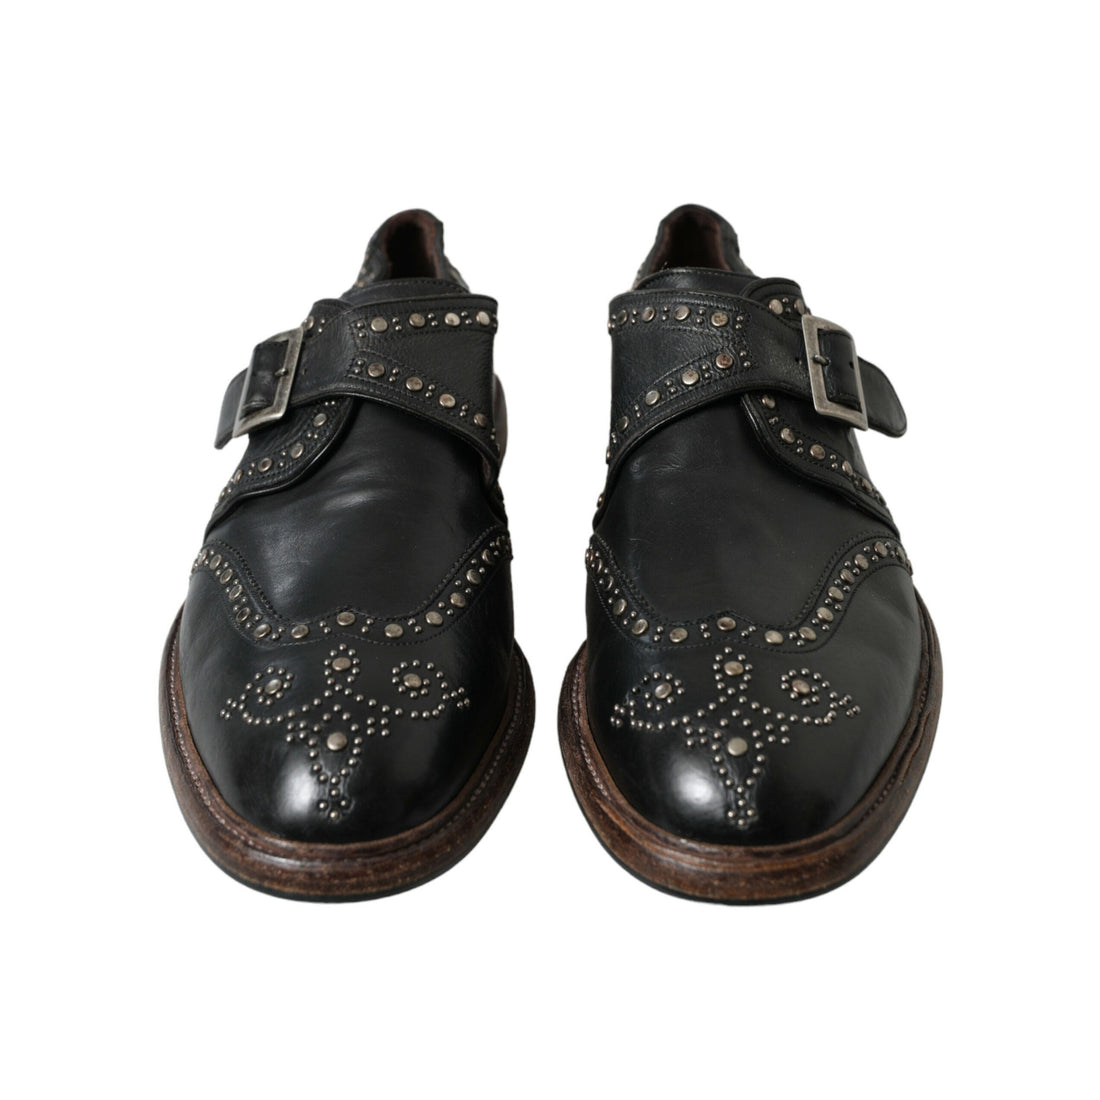 Dolce & Gabbana Black Leather Monk Strap Studded Dress Shoes